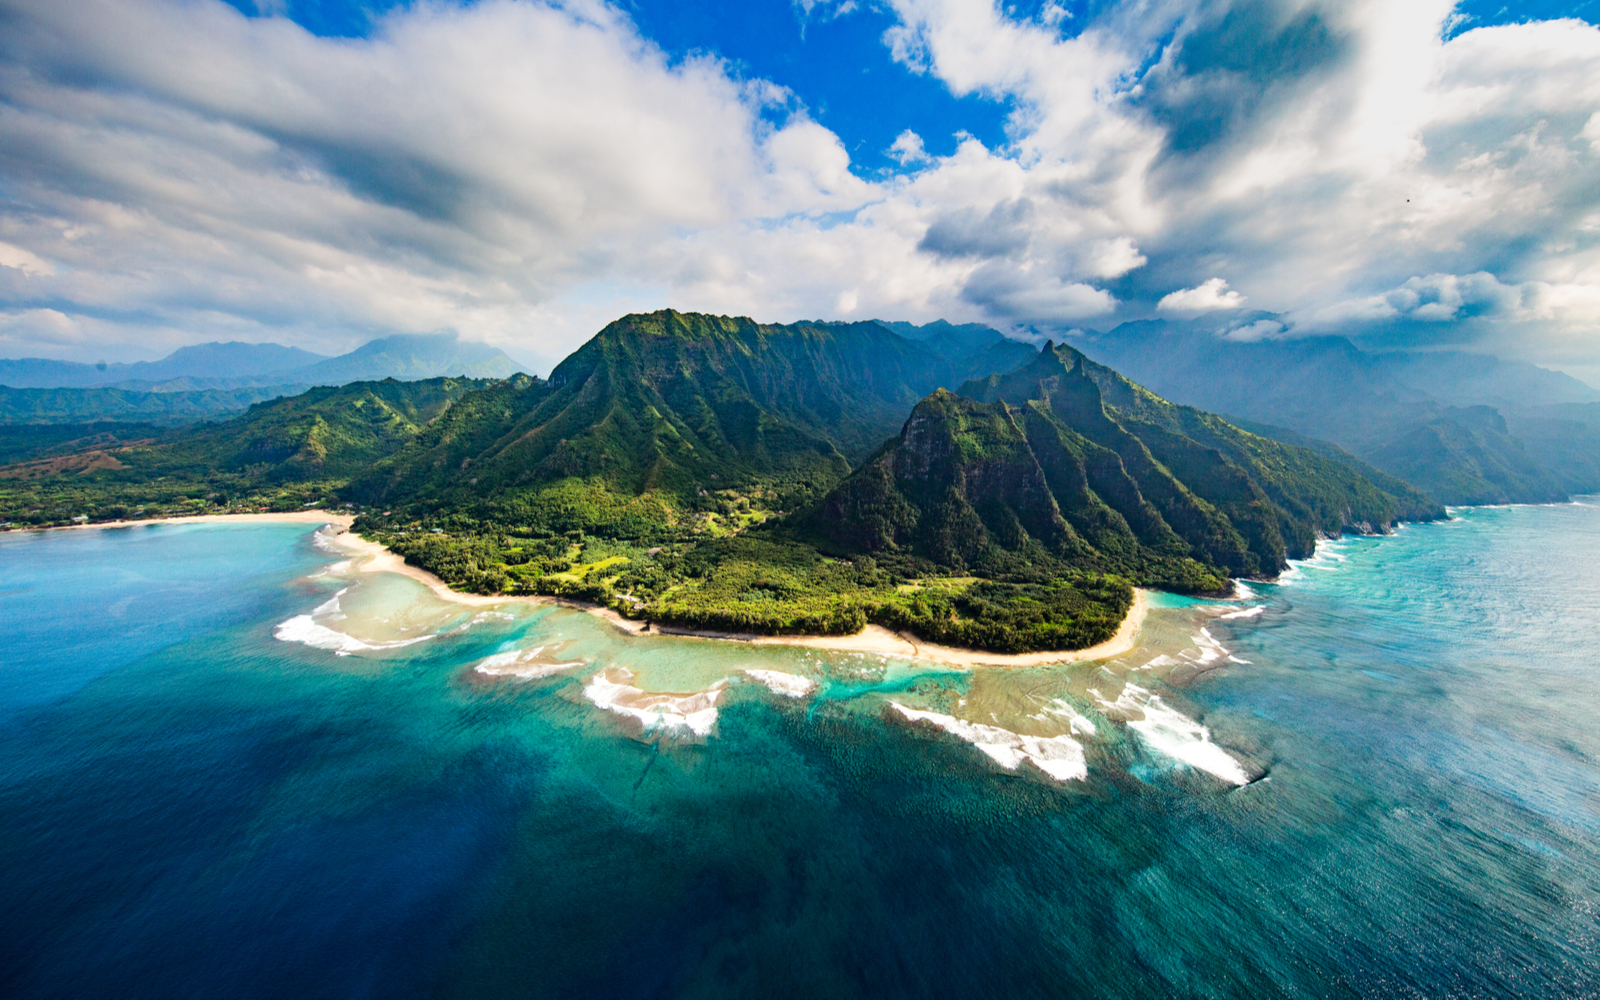 The 15 Best Hotels in Kauai in 2022